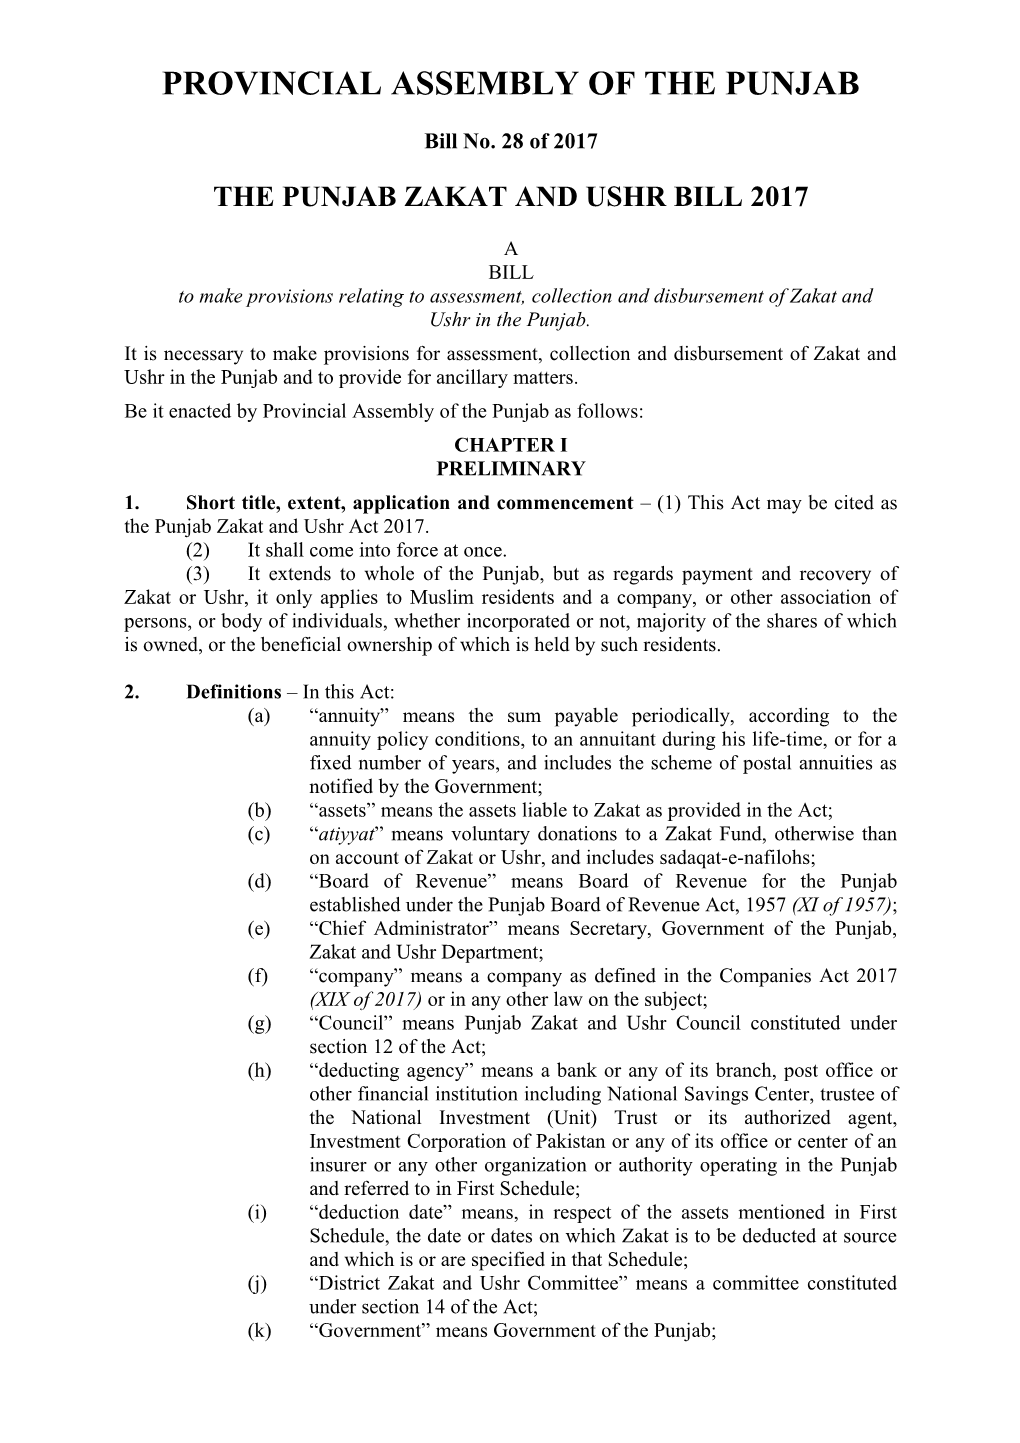 Vetted PEP (Amendment) Bill: 24.4.2017